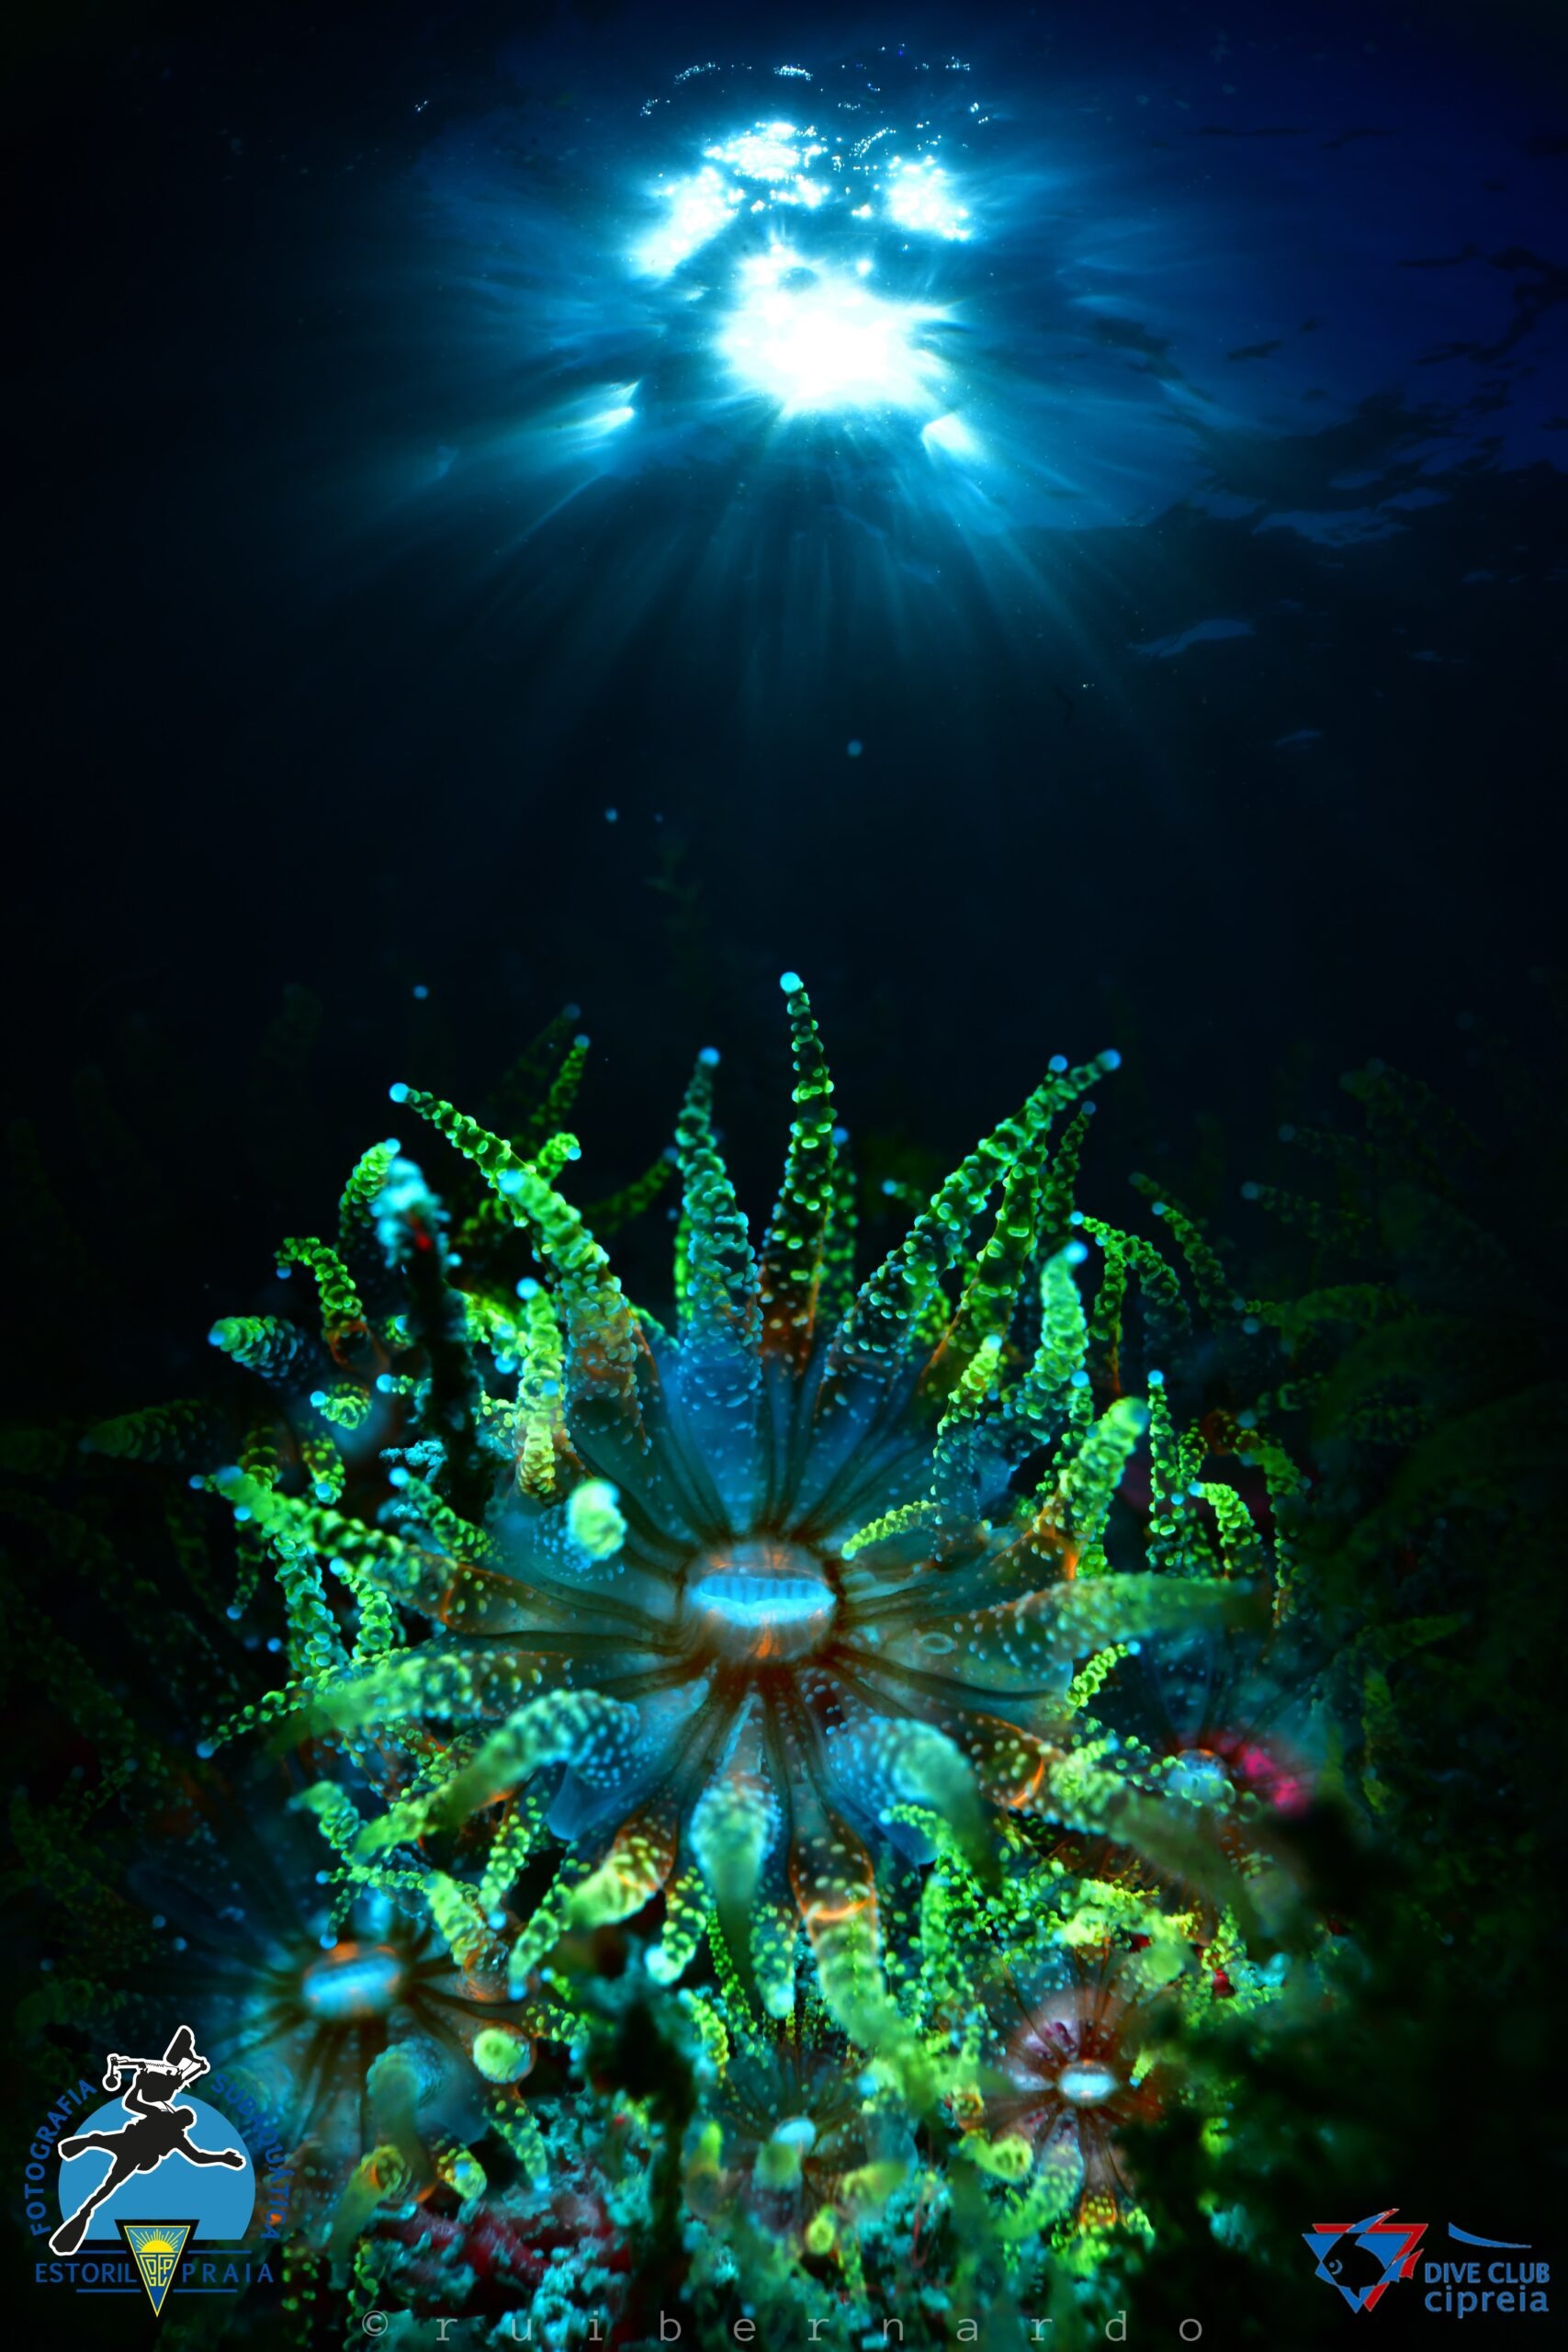 Equipa Vencedora  – Colaboradora da Prospectiva volta a conquistar título de fotografia subaquática